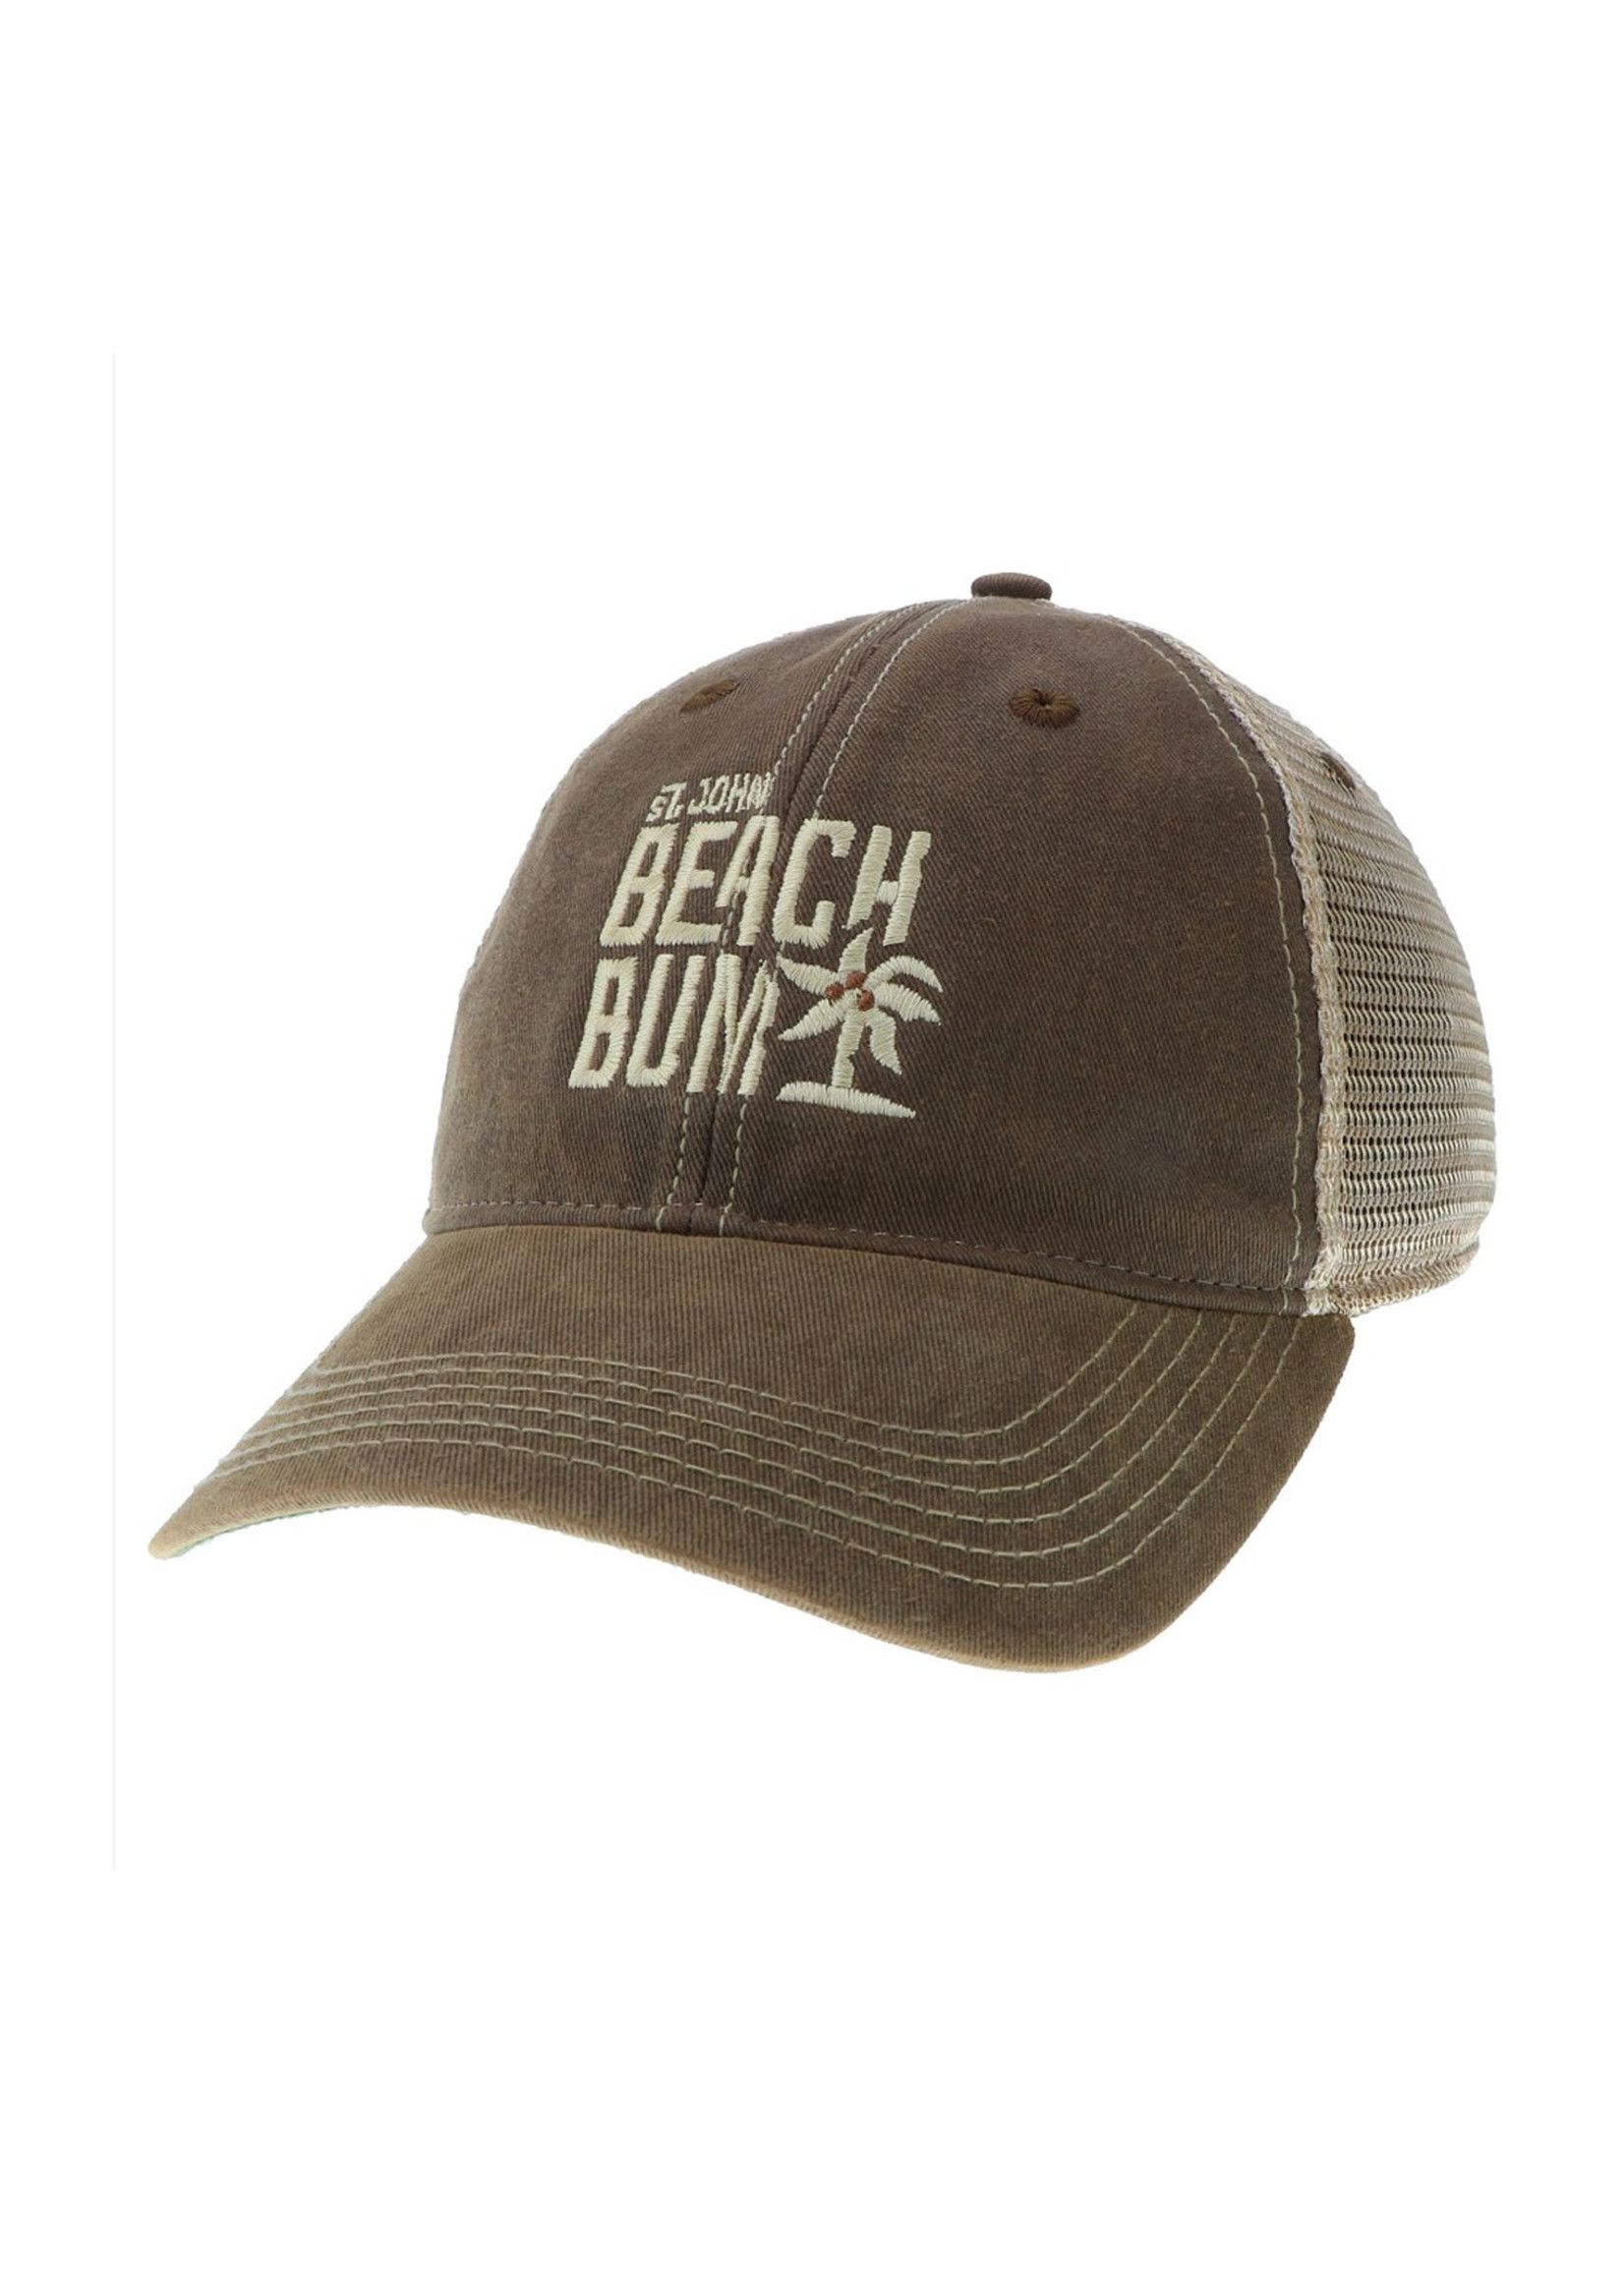 St. John Beach Bum St. John Beach Bum Hat